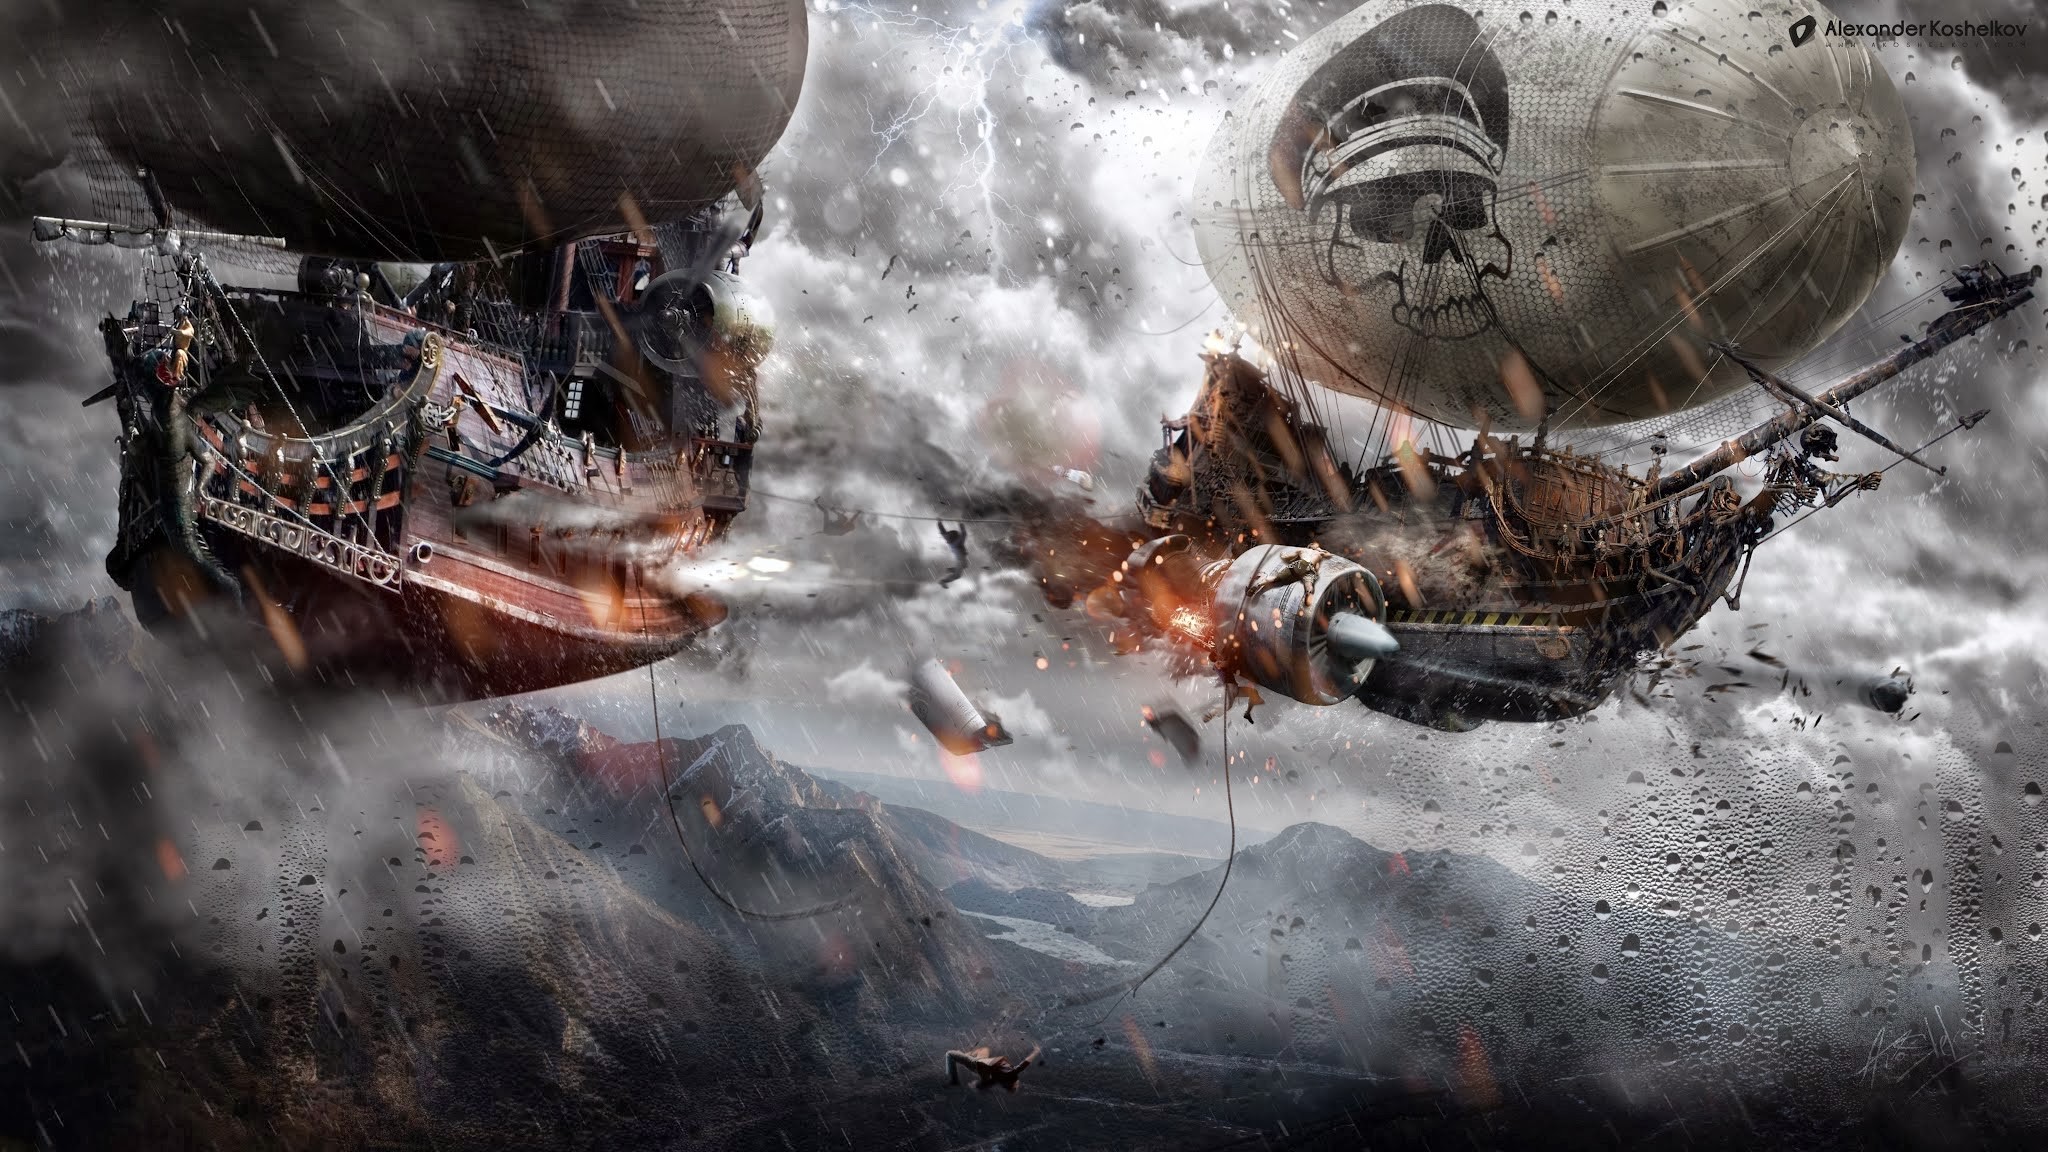 General 2048x1152 digital art fantasy art steampunk airships vehicle